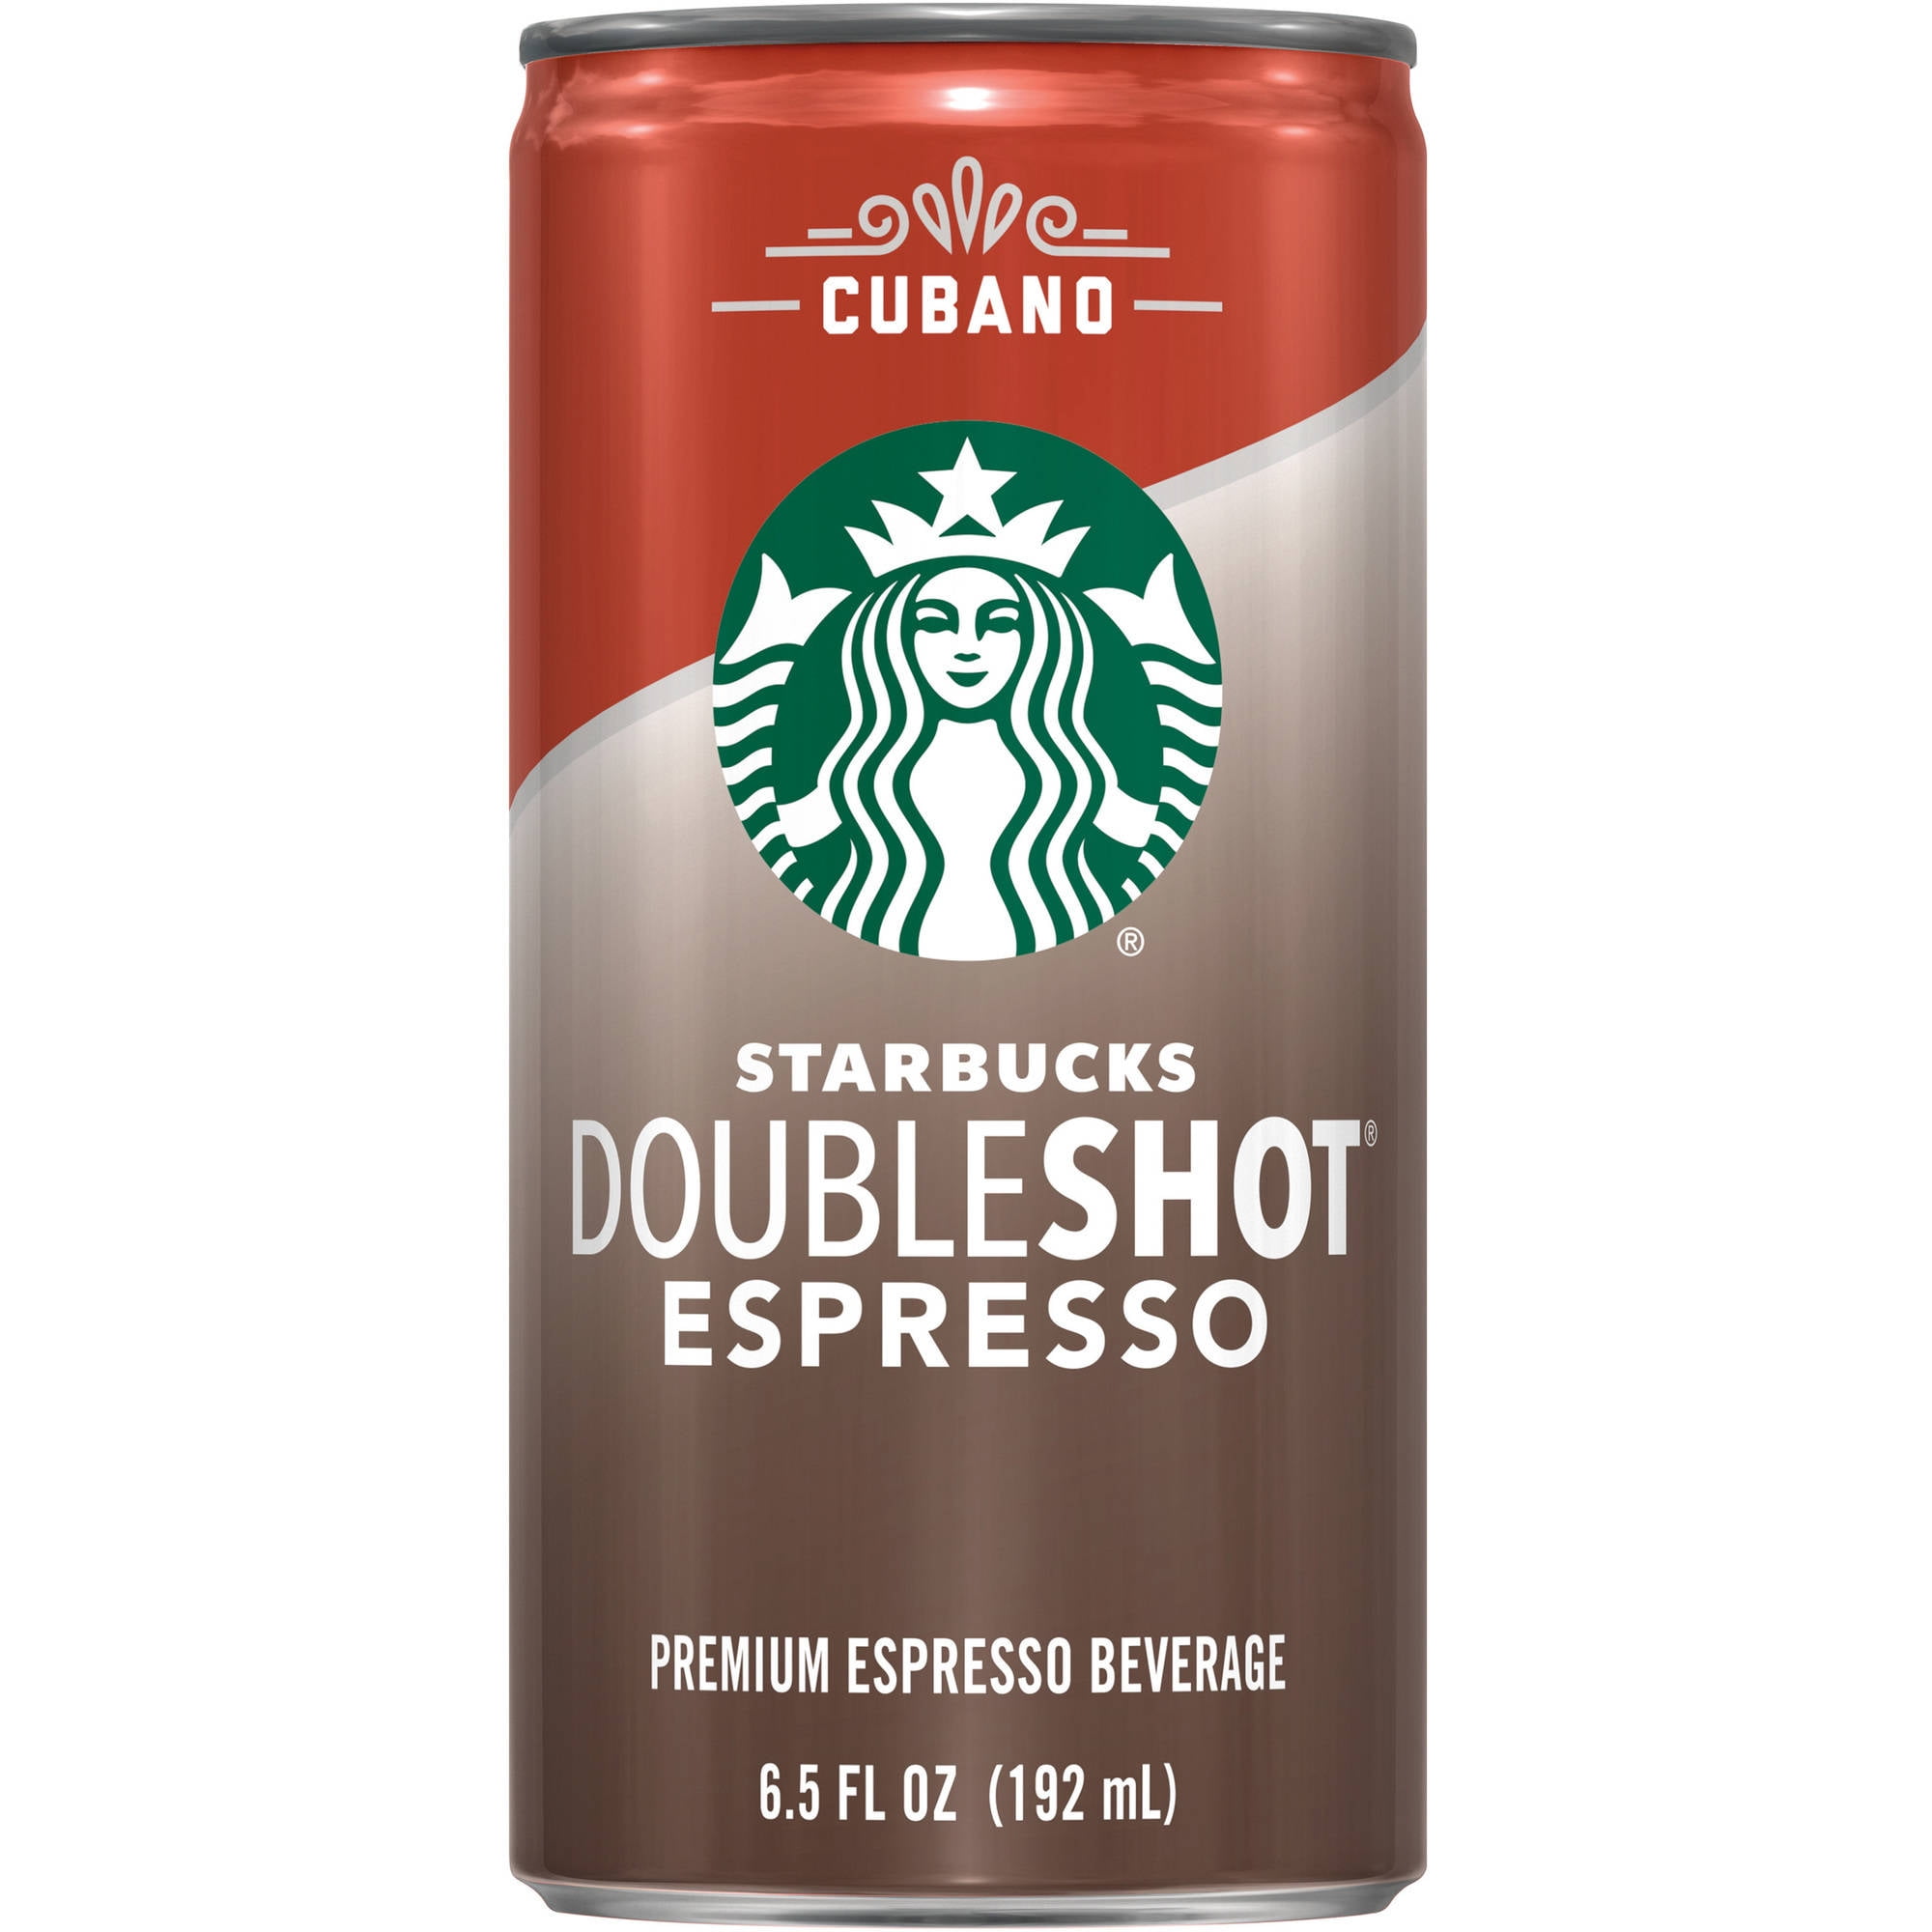 Starbucks Doubleshot Espresso Cubano Premium ... - Walmart